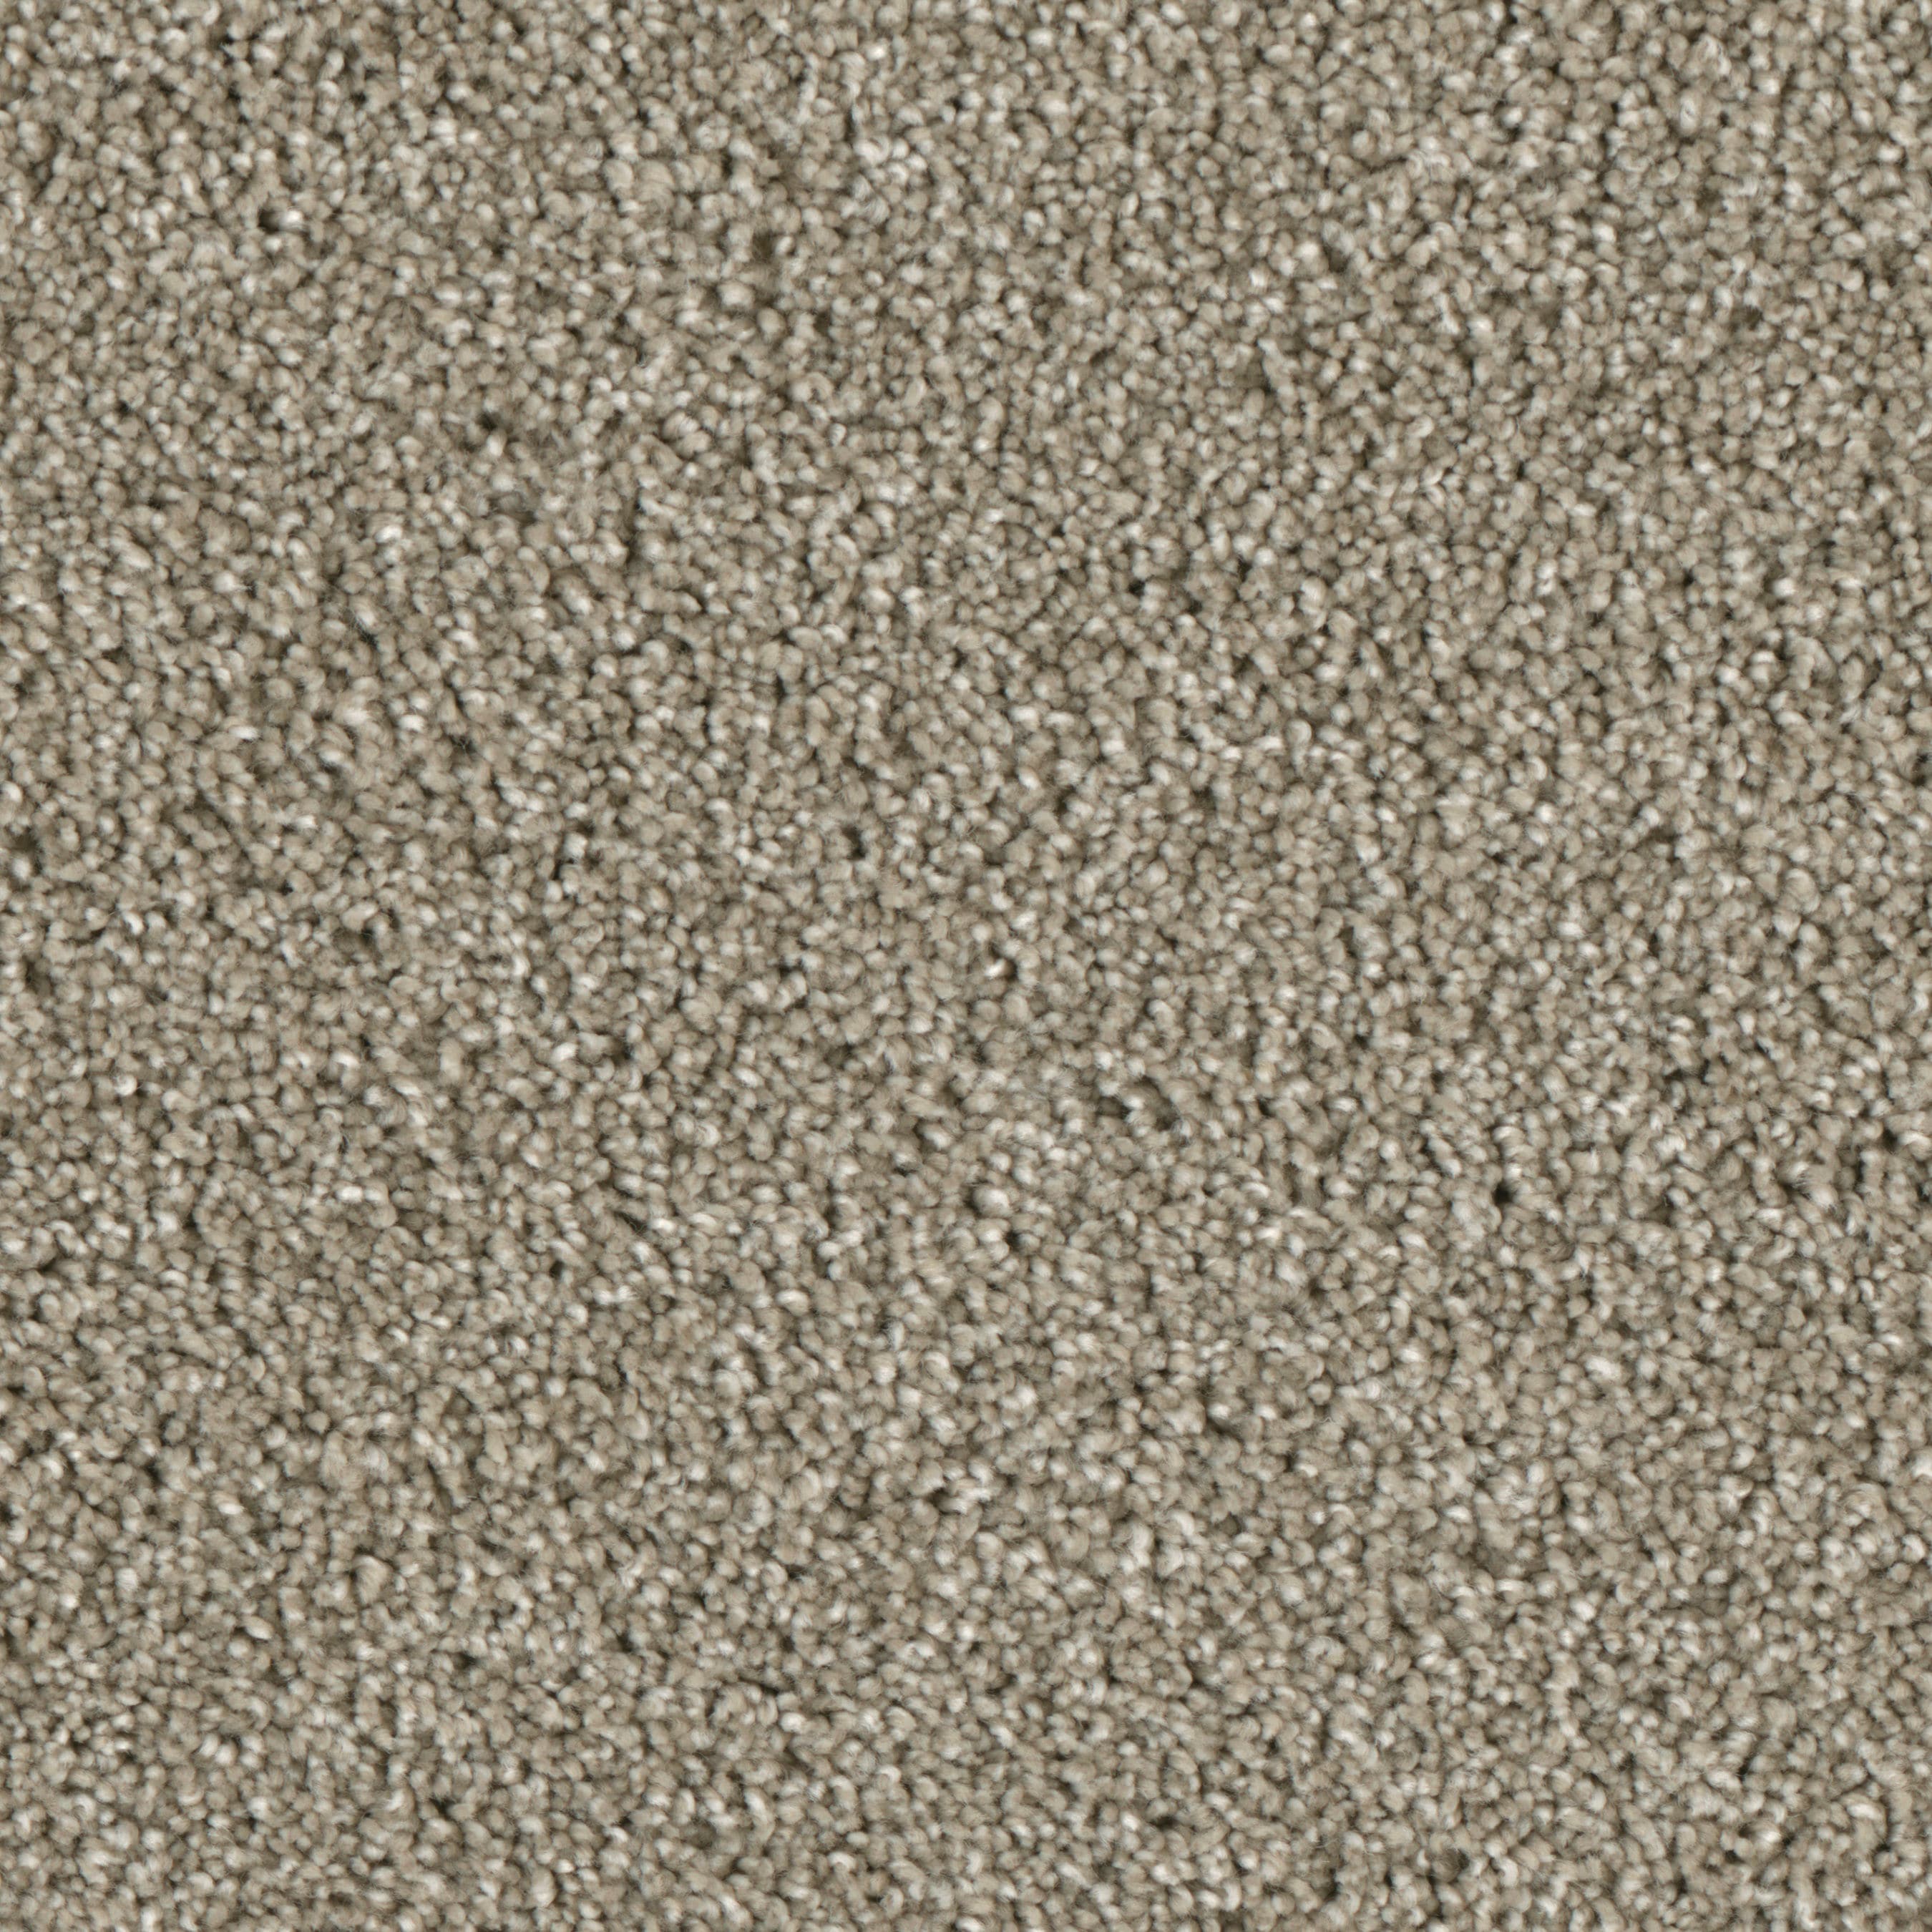 (Sample) Lenox Park Walking Trail Textured Indoor Carpet | - STAINMASTER S9255-911-S